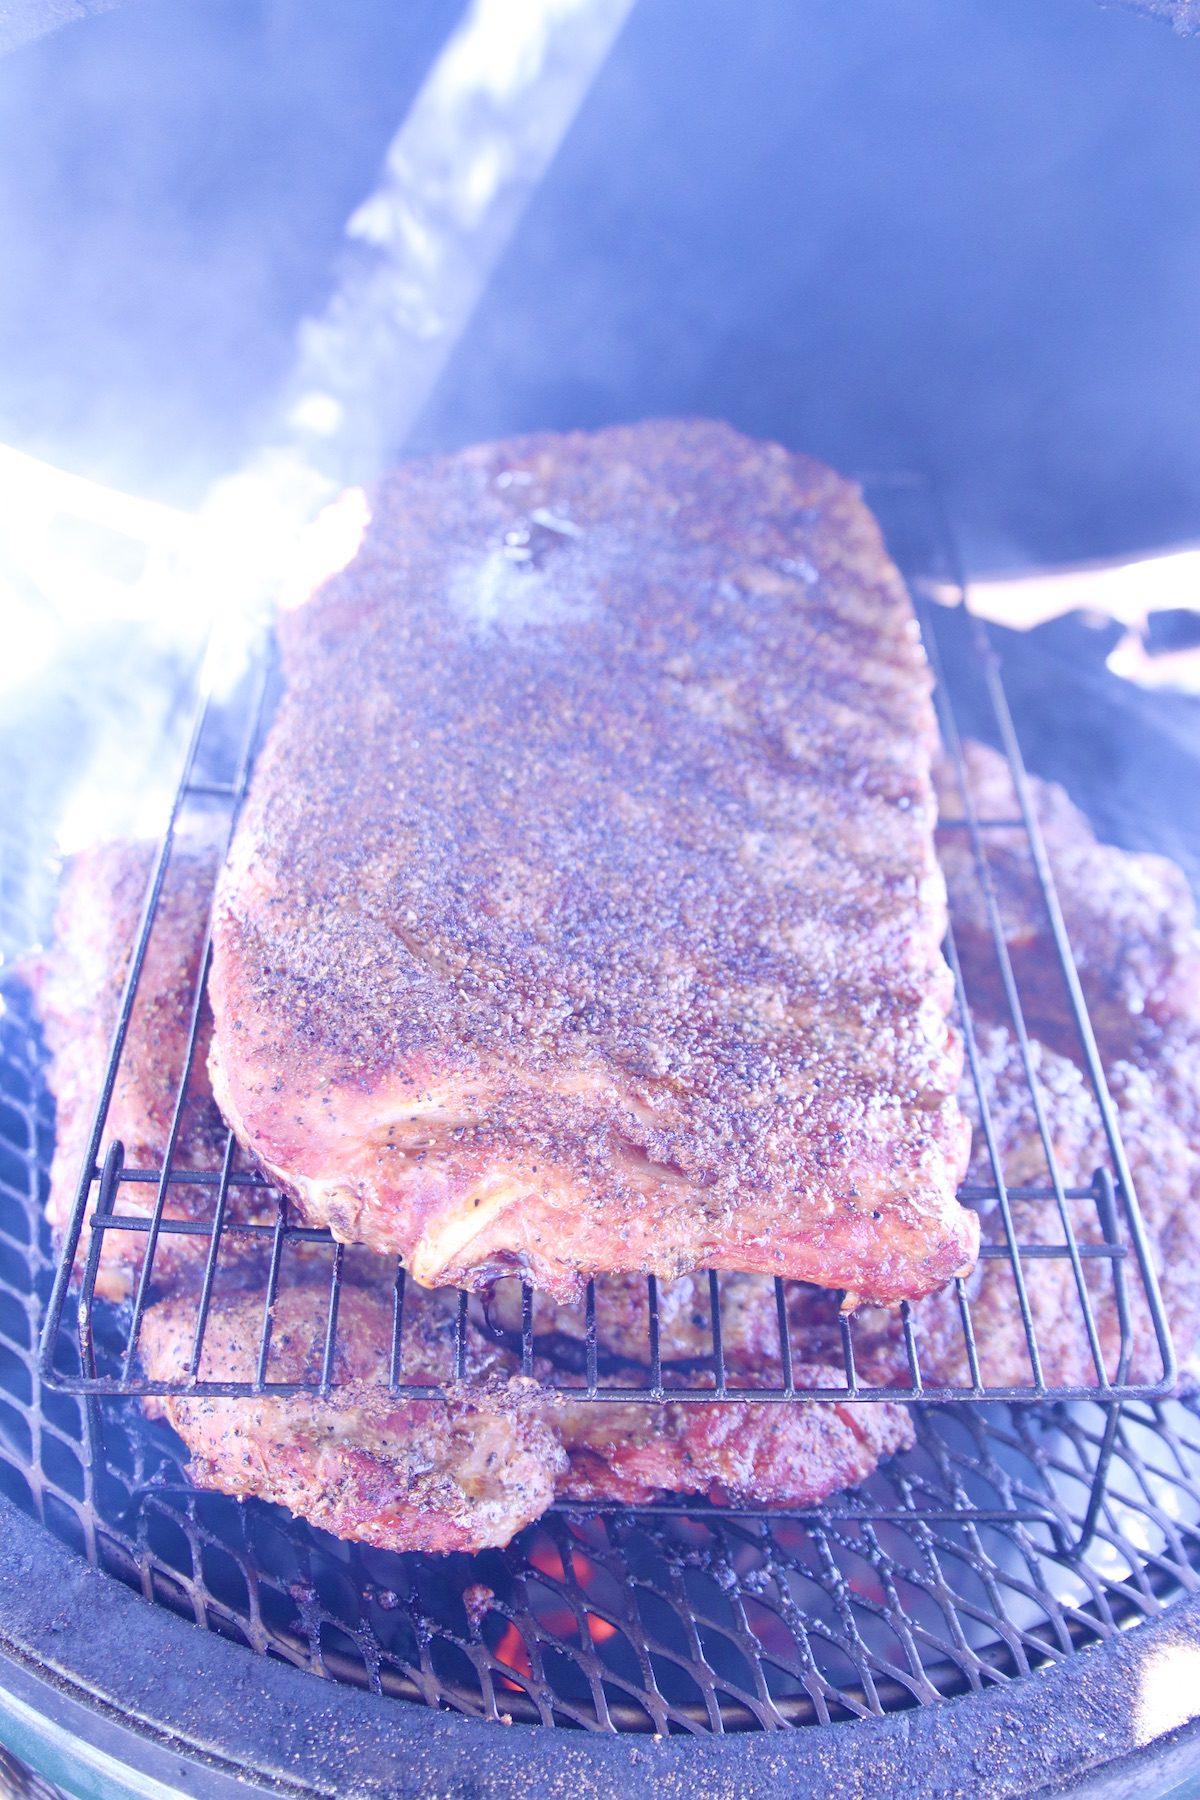 grilling pork ribs